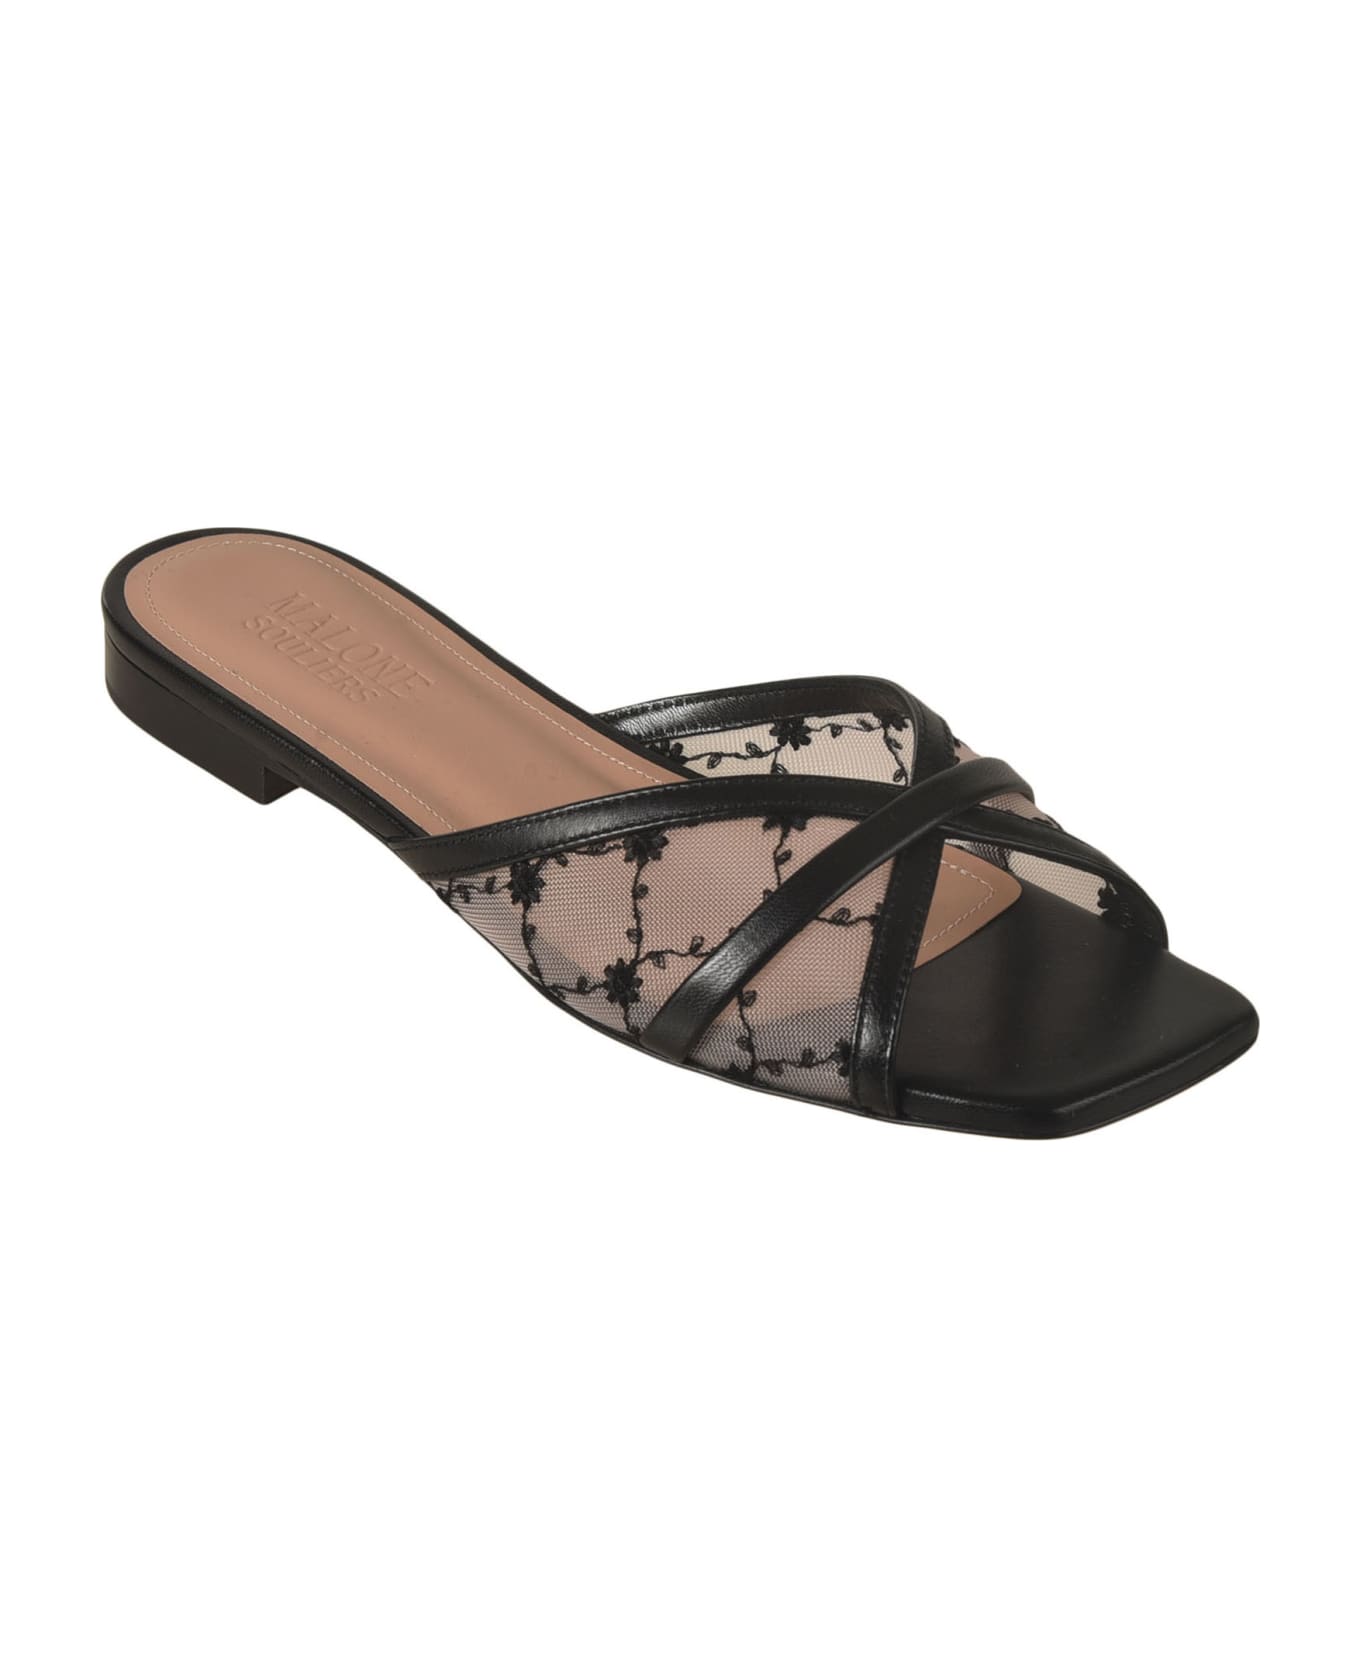 Malone Souliers Perla Flat Sandals - Black